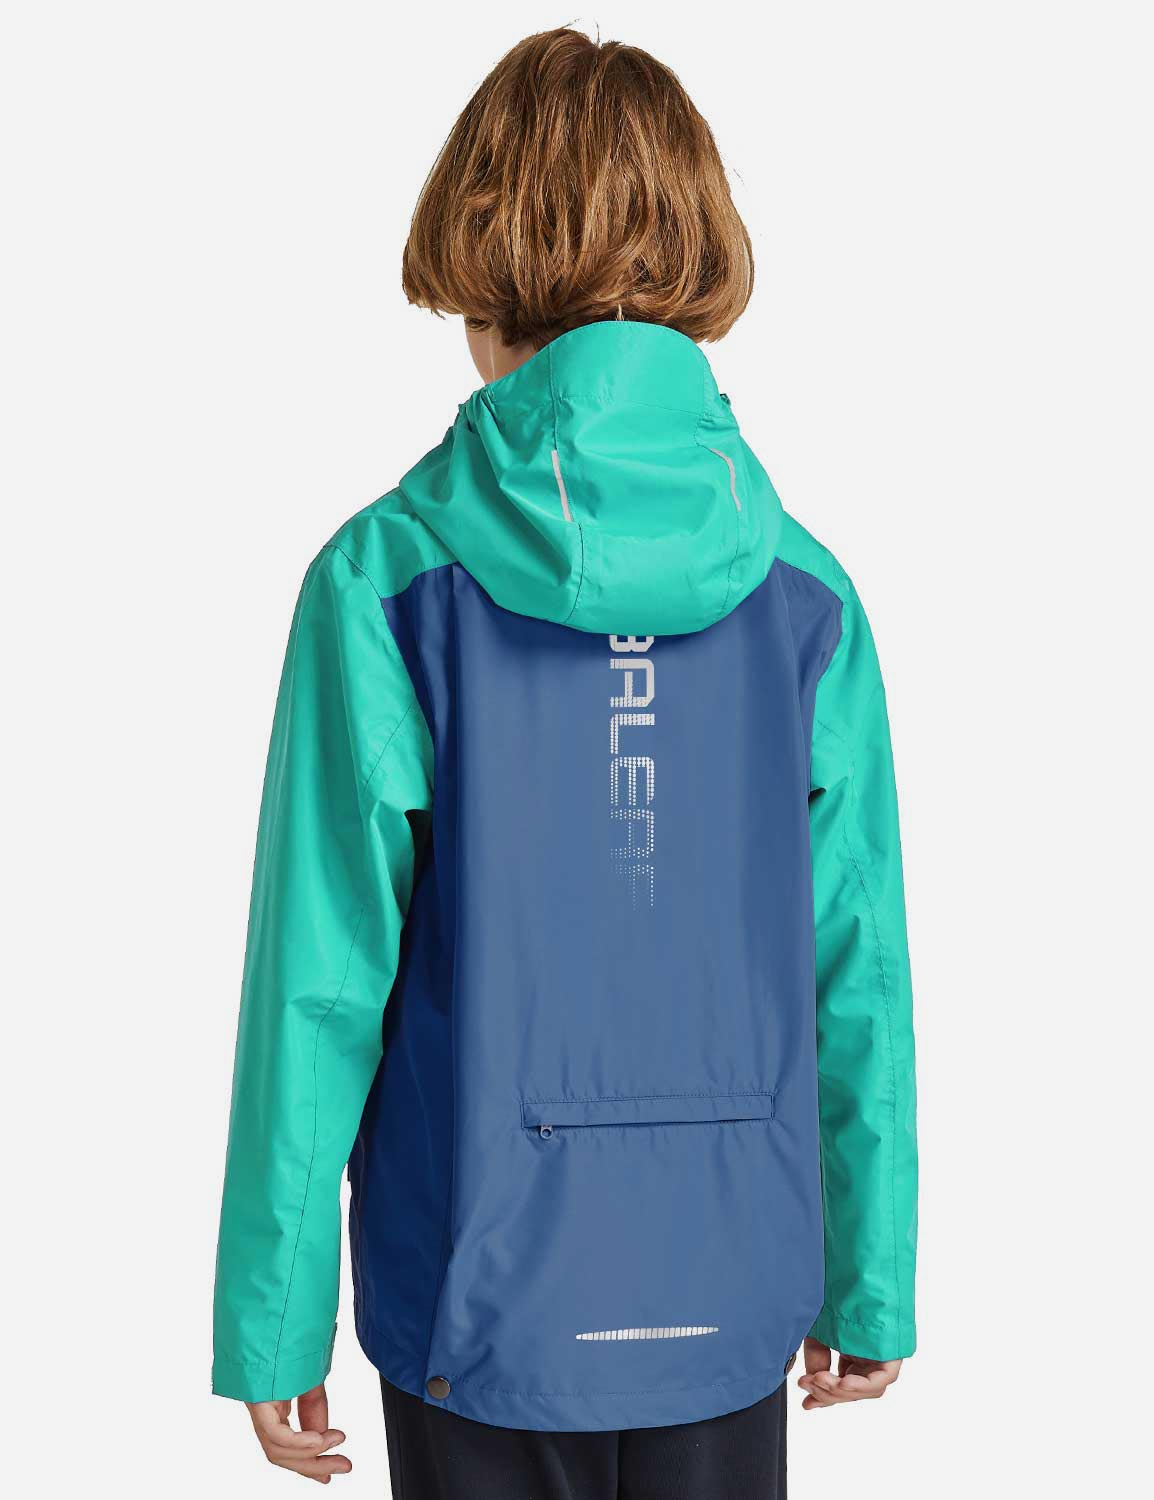 Baleaf Kid's Waterproof Outdoor Hooded Cycling Rain Jacket cai037 Navy/Green Back